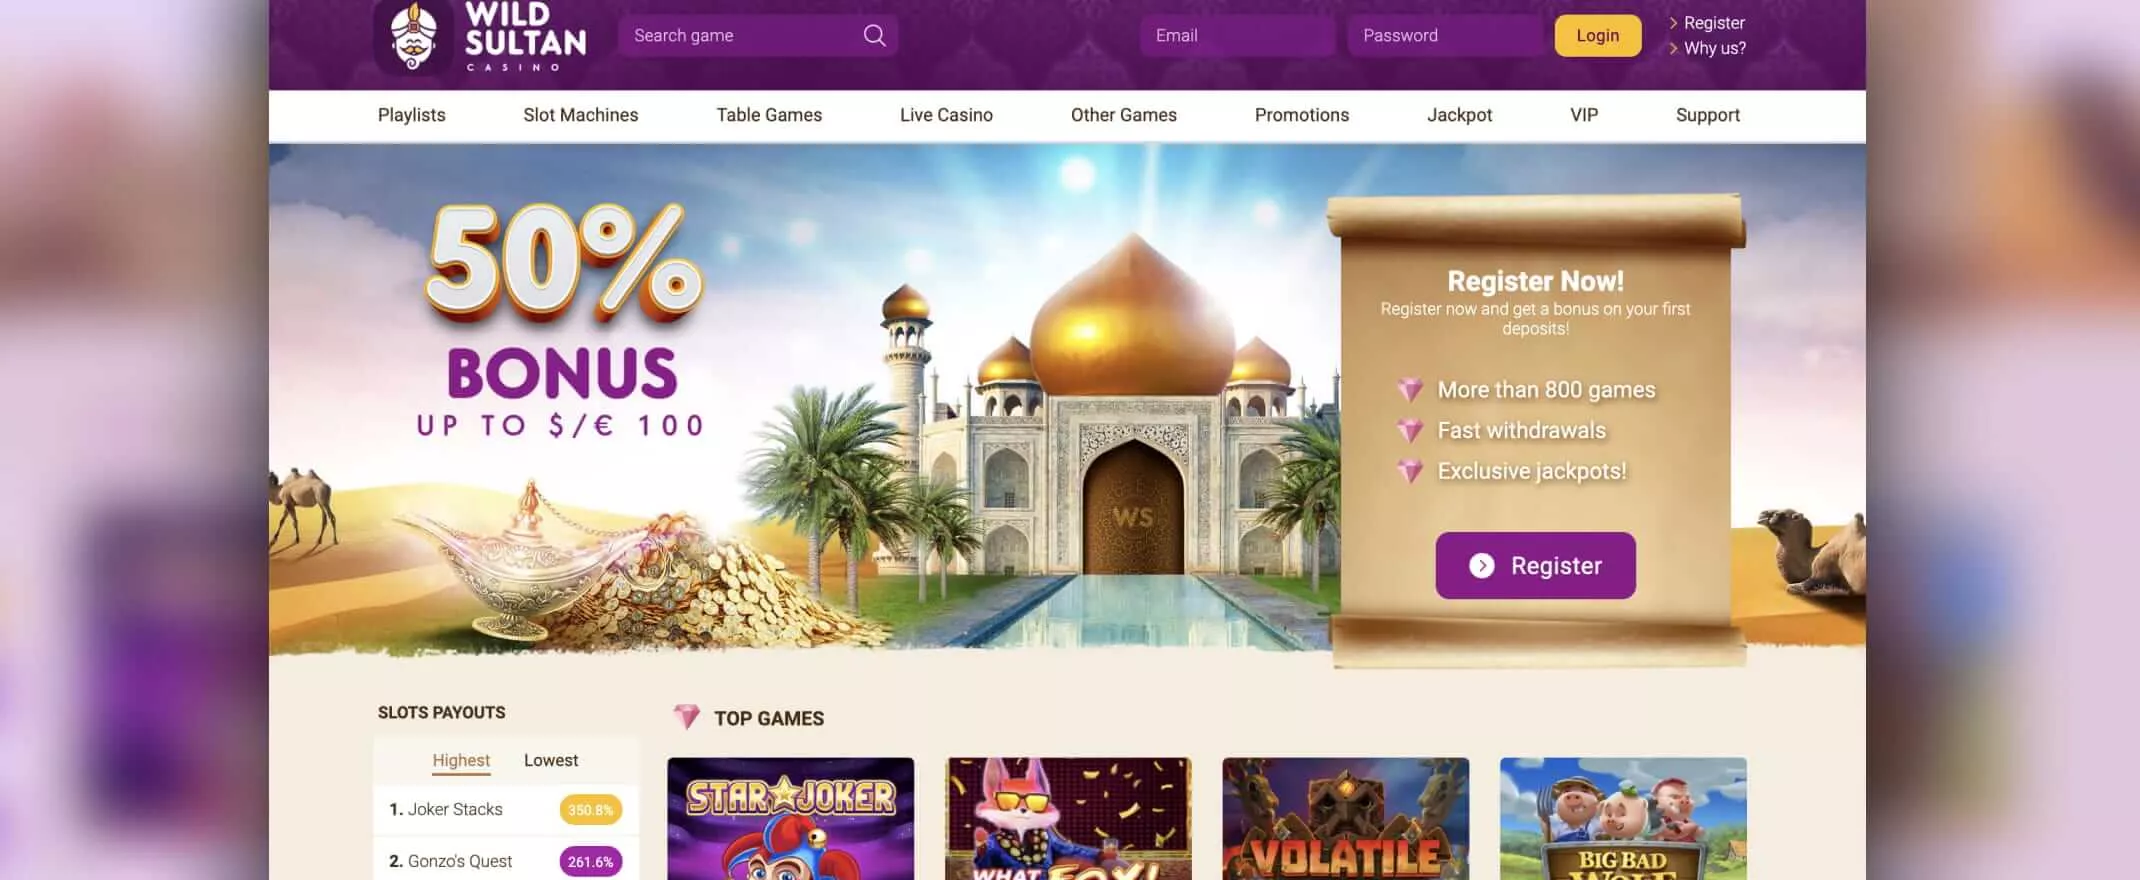 wild sultan homepage